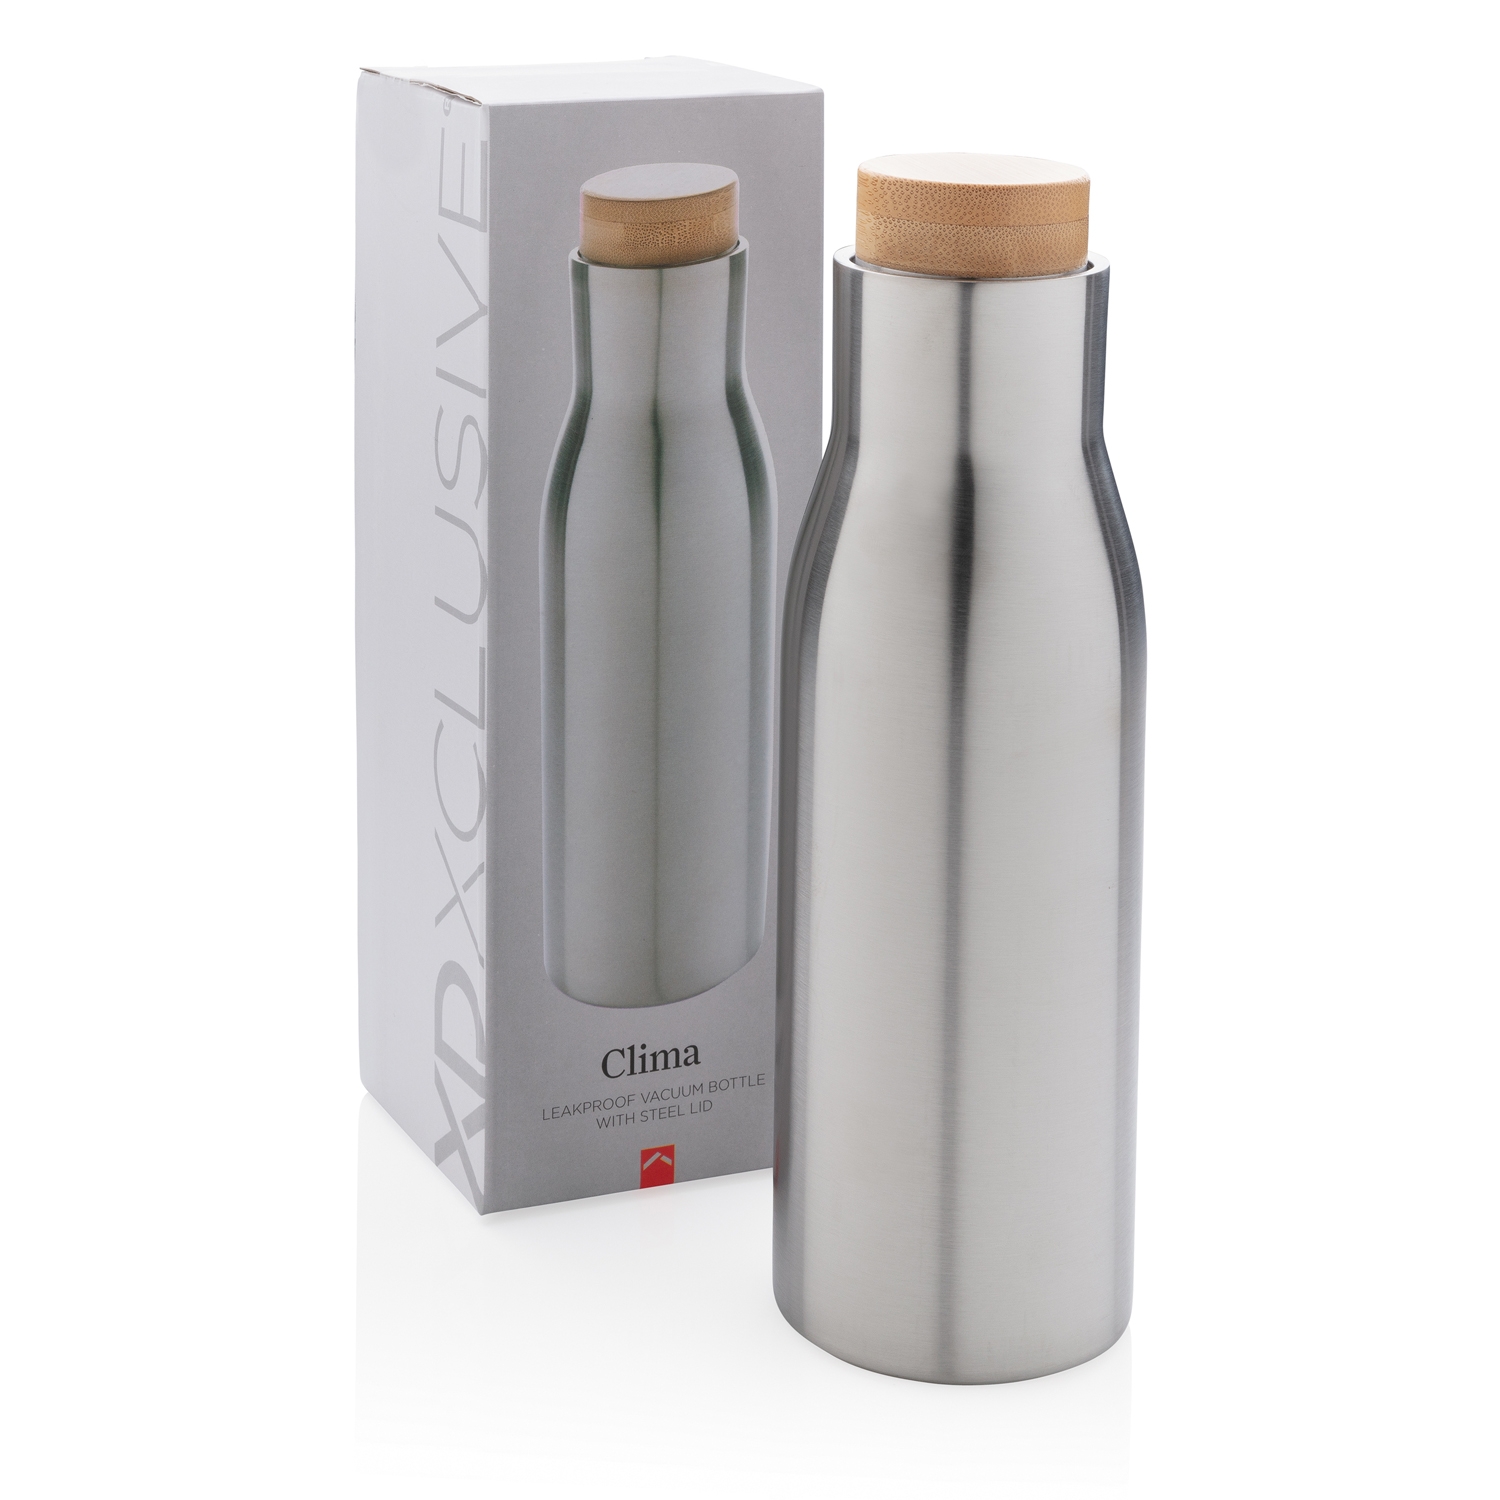 Герметичная вакуумная бутылка Clima со стальной крышкой, 500 мл, серый, нержавеющая сталь; бамбук